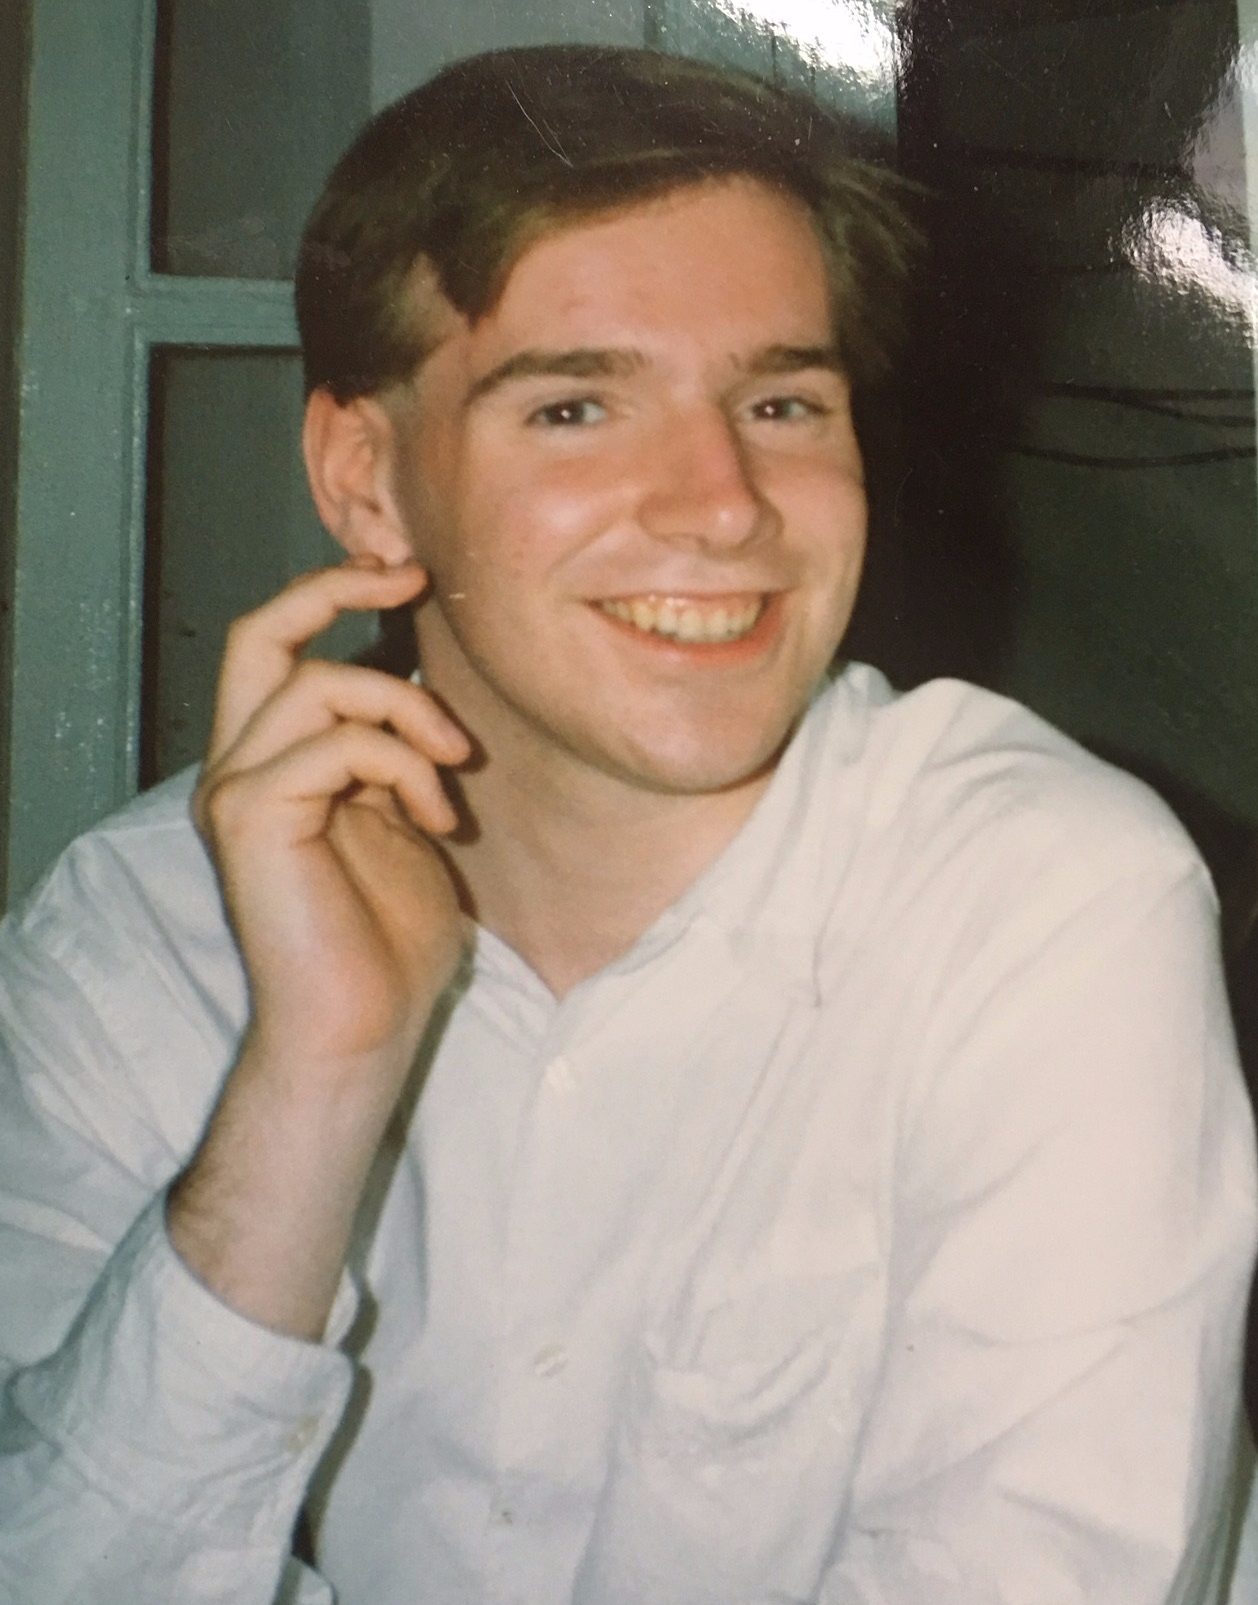 Edward, aged 18